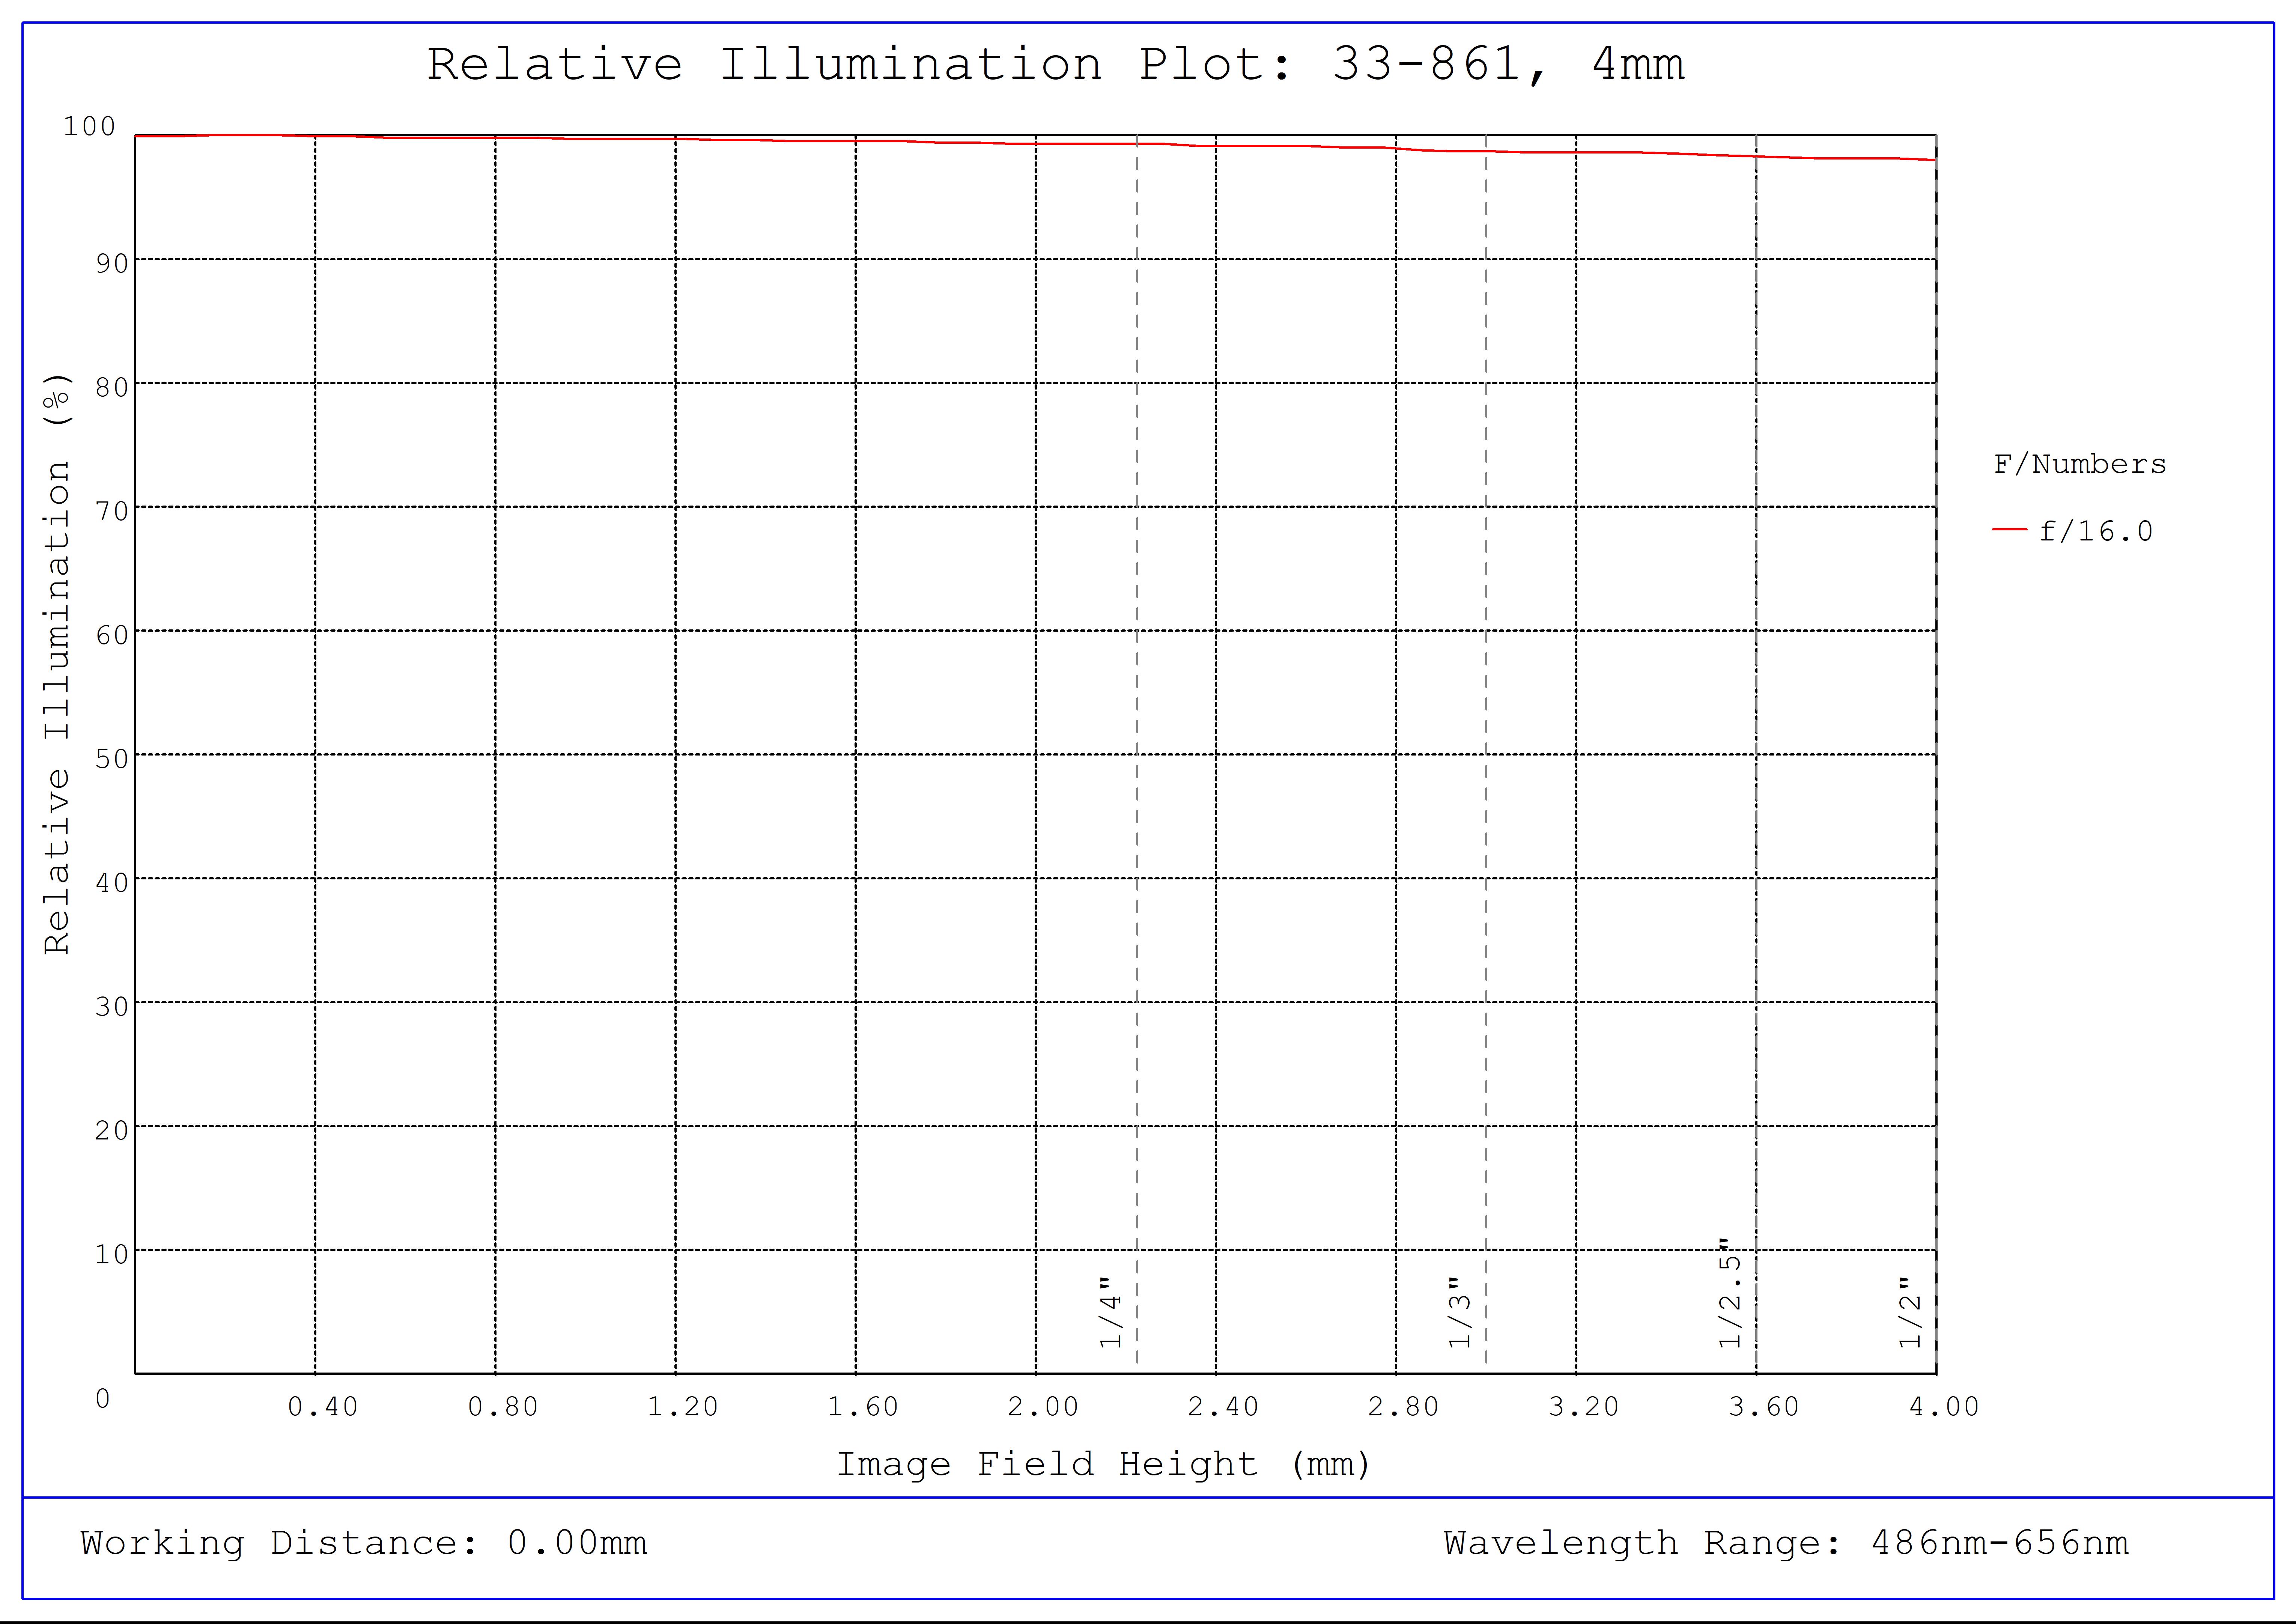 #33-861, 4mm, f/16 UCi Series Fixed Focal Length Lens, Relative Illumination Plot